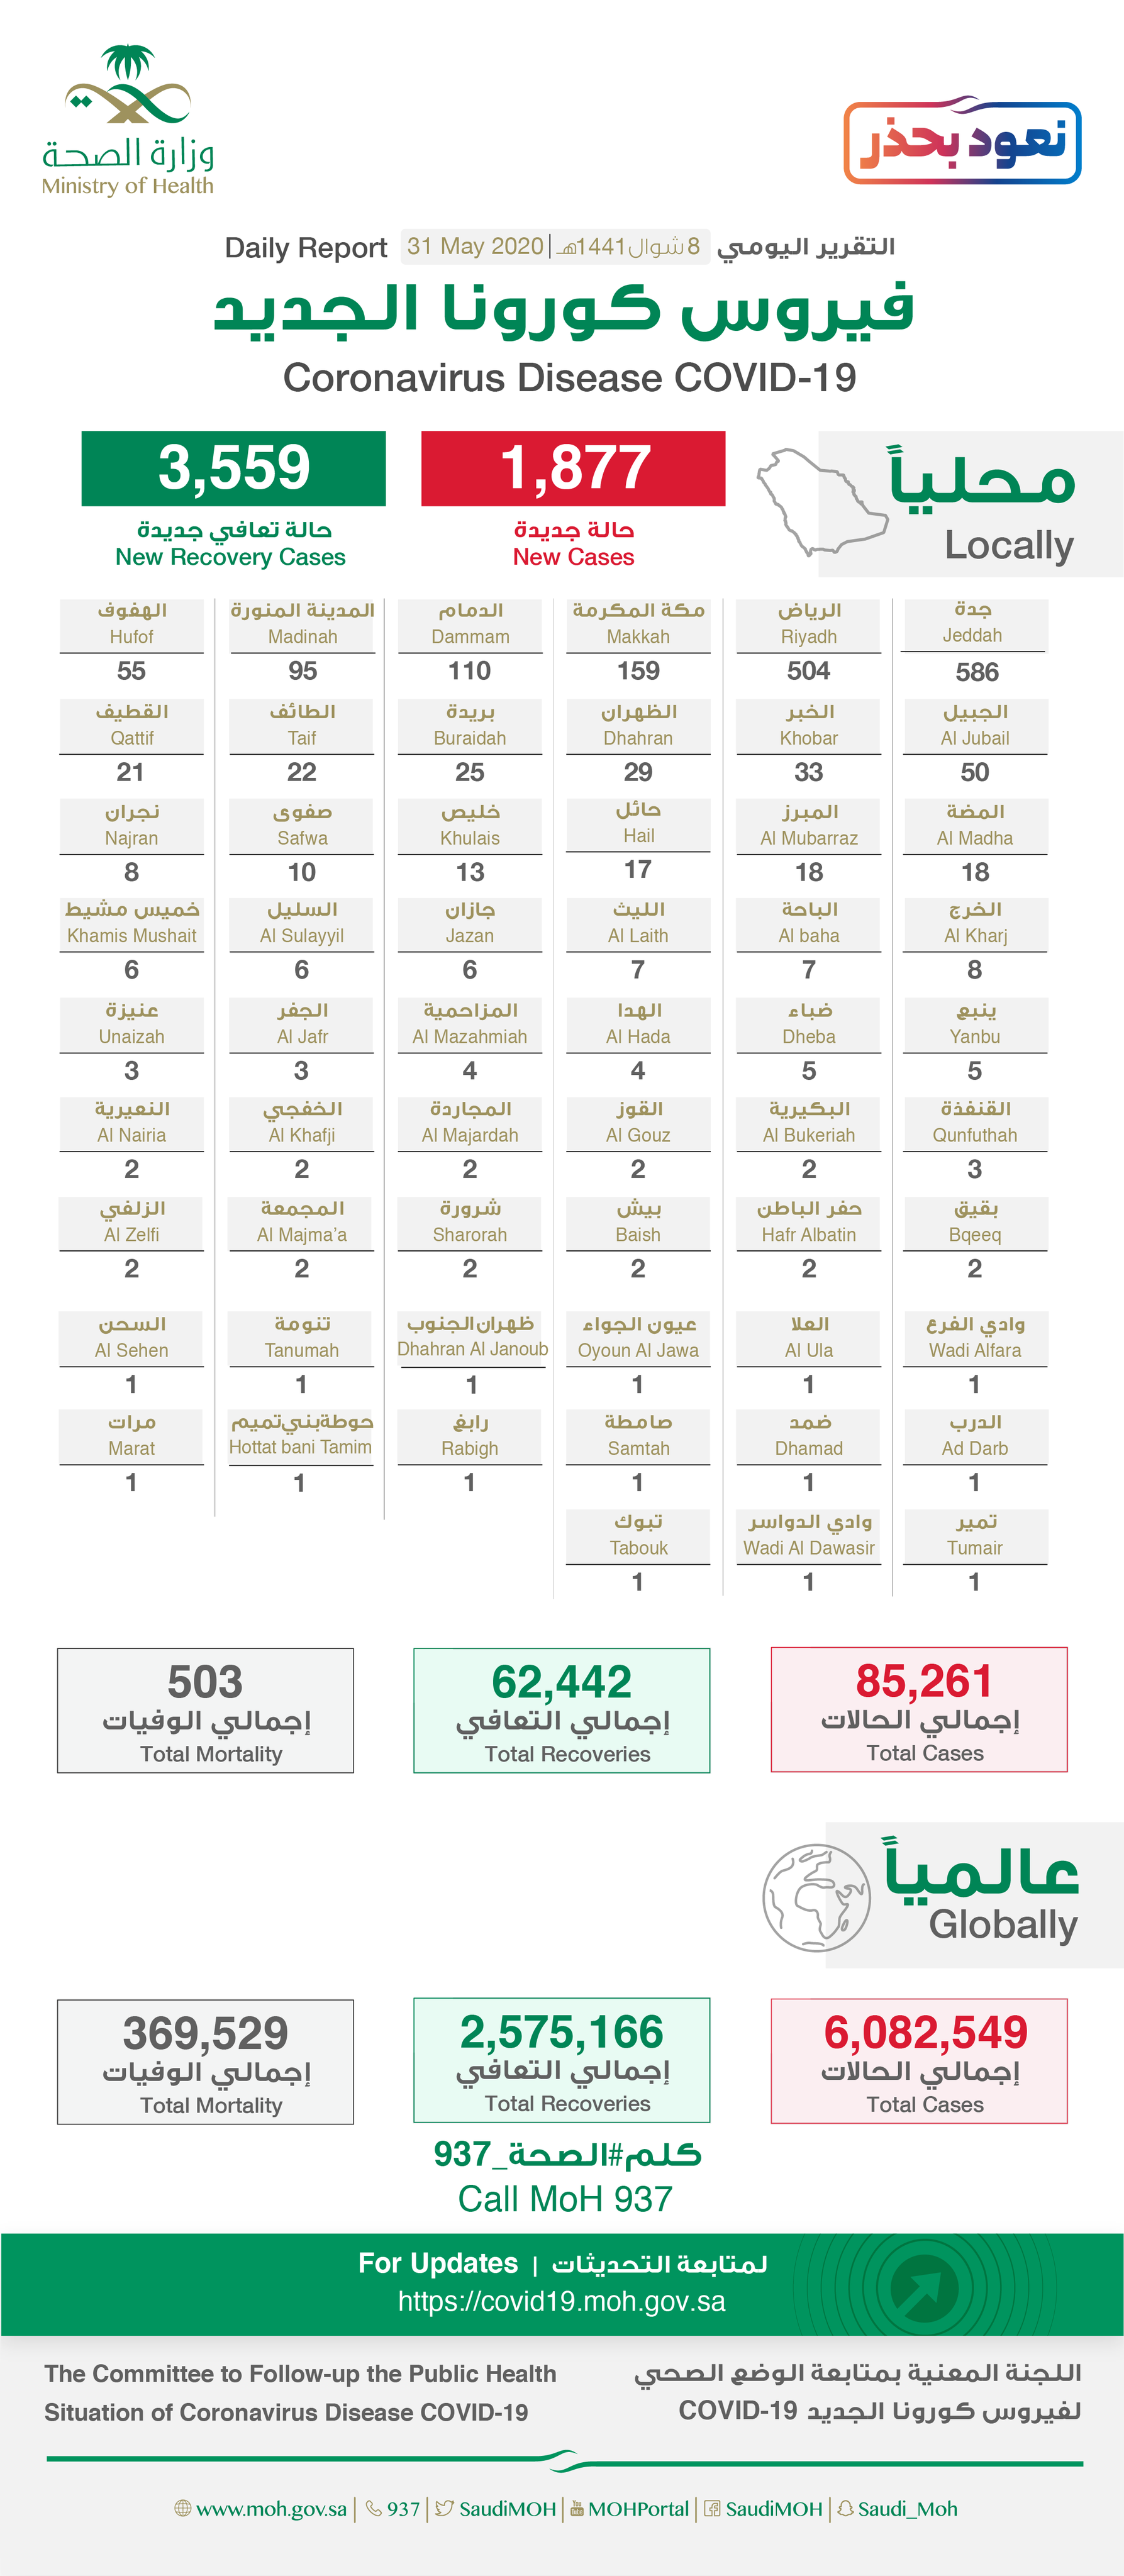 Saudi Arabia Coronavirus : Total Cases : 85261, Cured : 62442 , New Cases : 1877 , Deaths: 503 , Active Cases : 22316